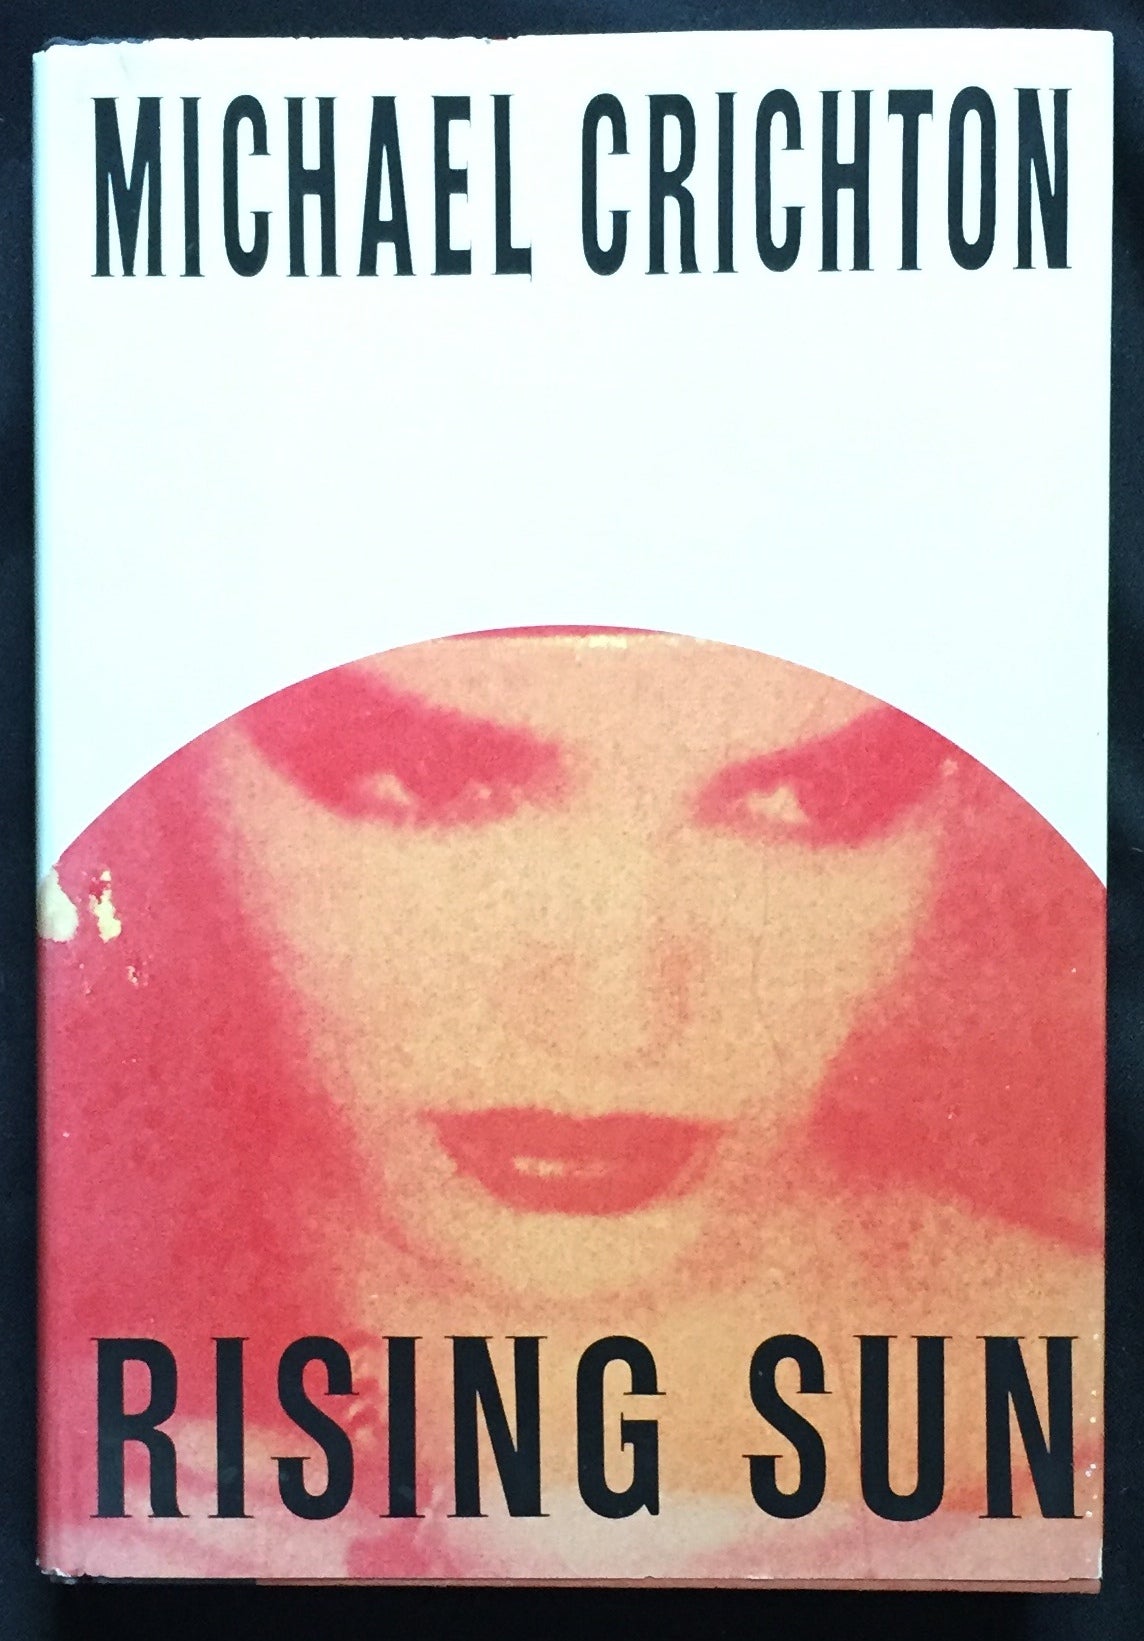 Rising Sun by Michael Crichton